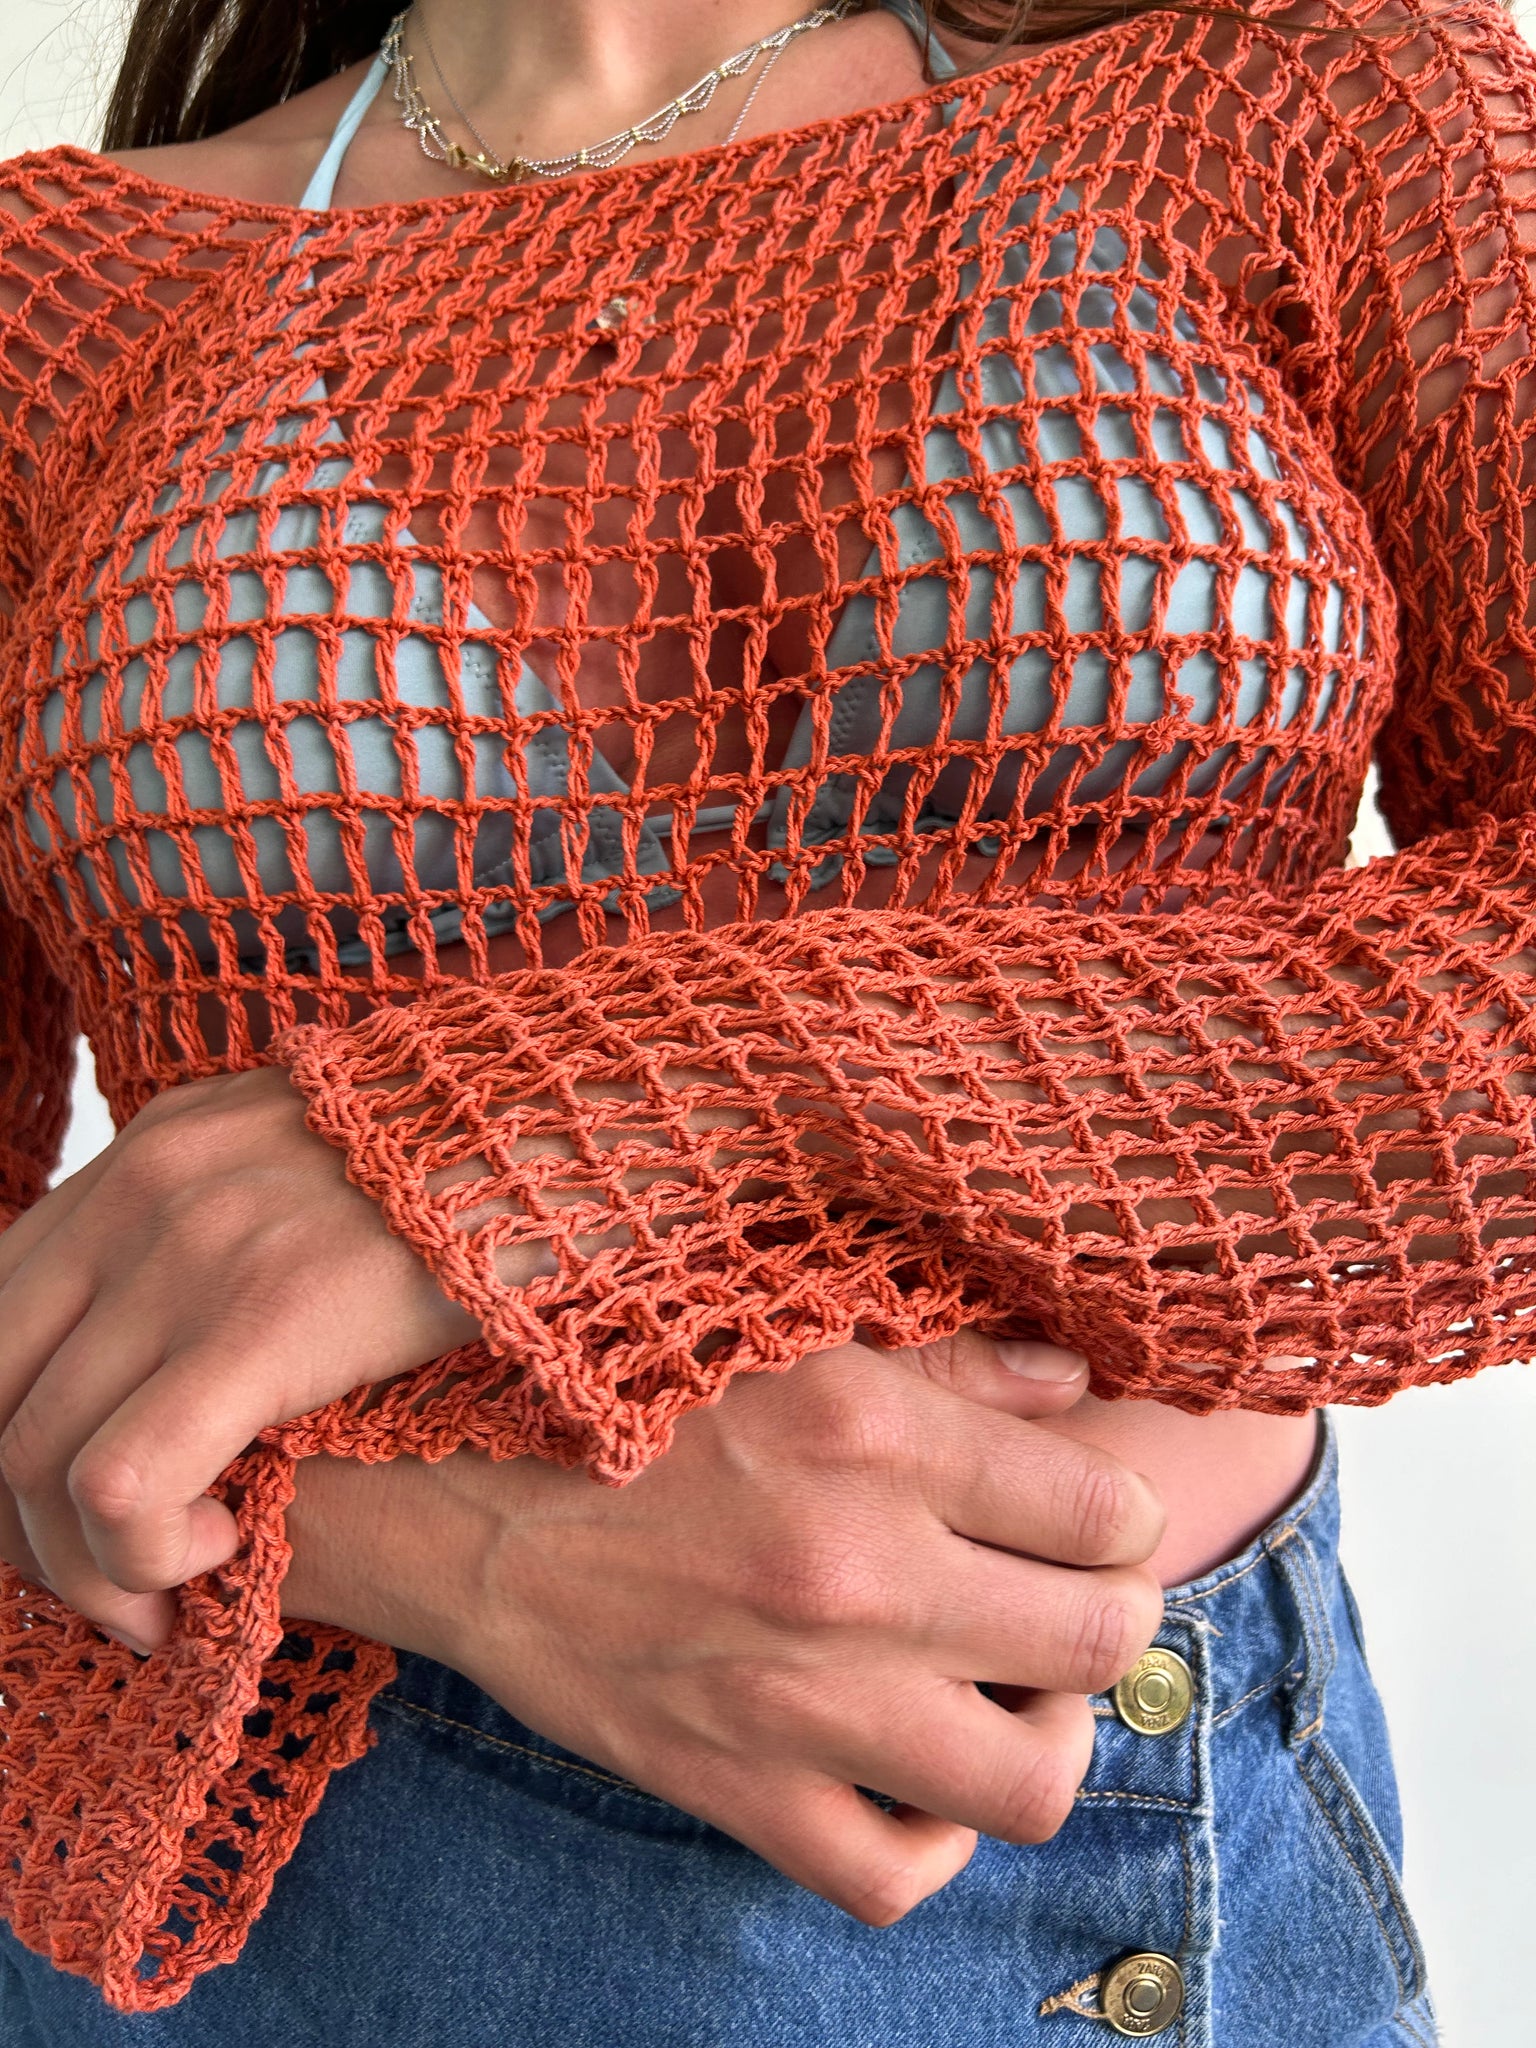 Burnt orange mesh crochet flare sleeve long sleeve top (M/L)